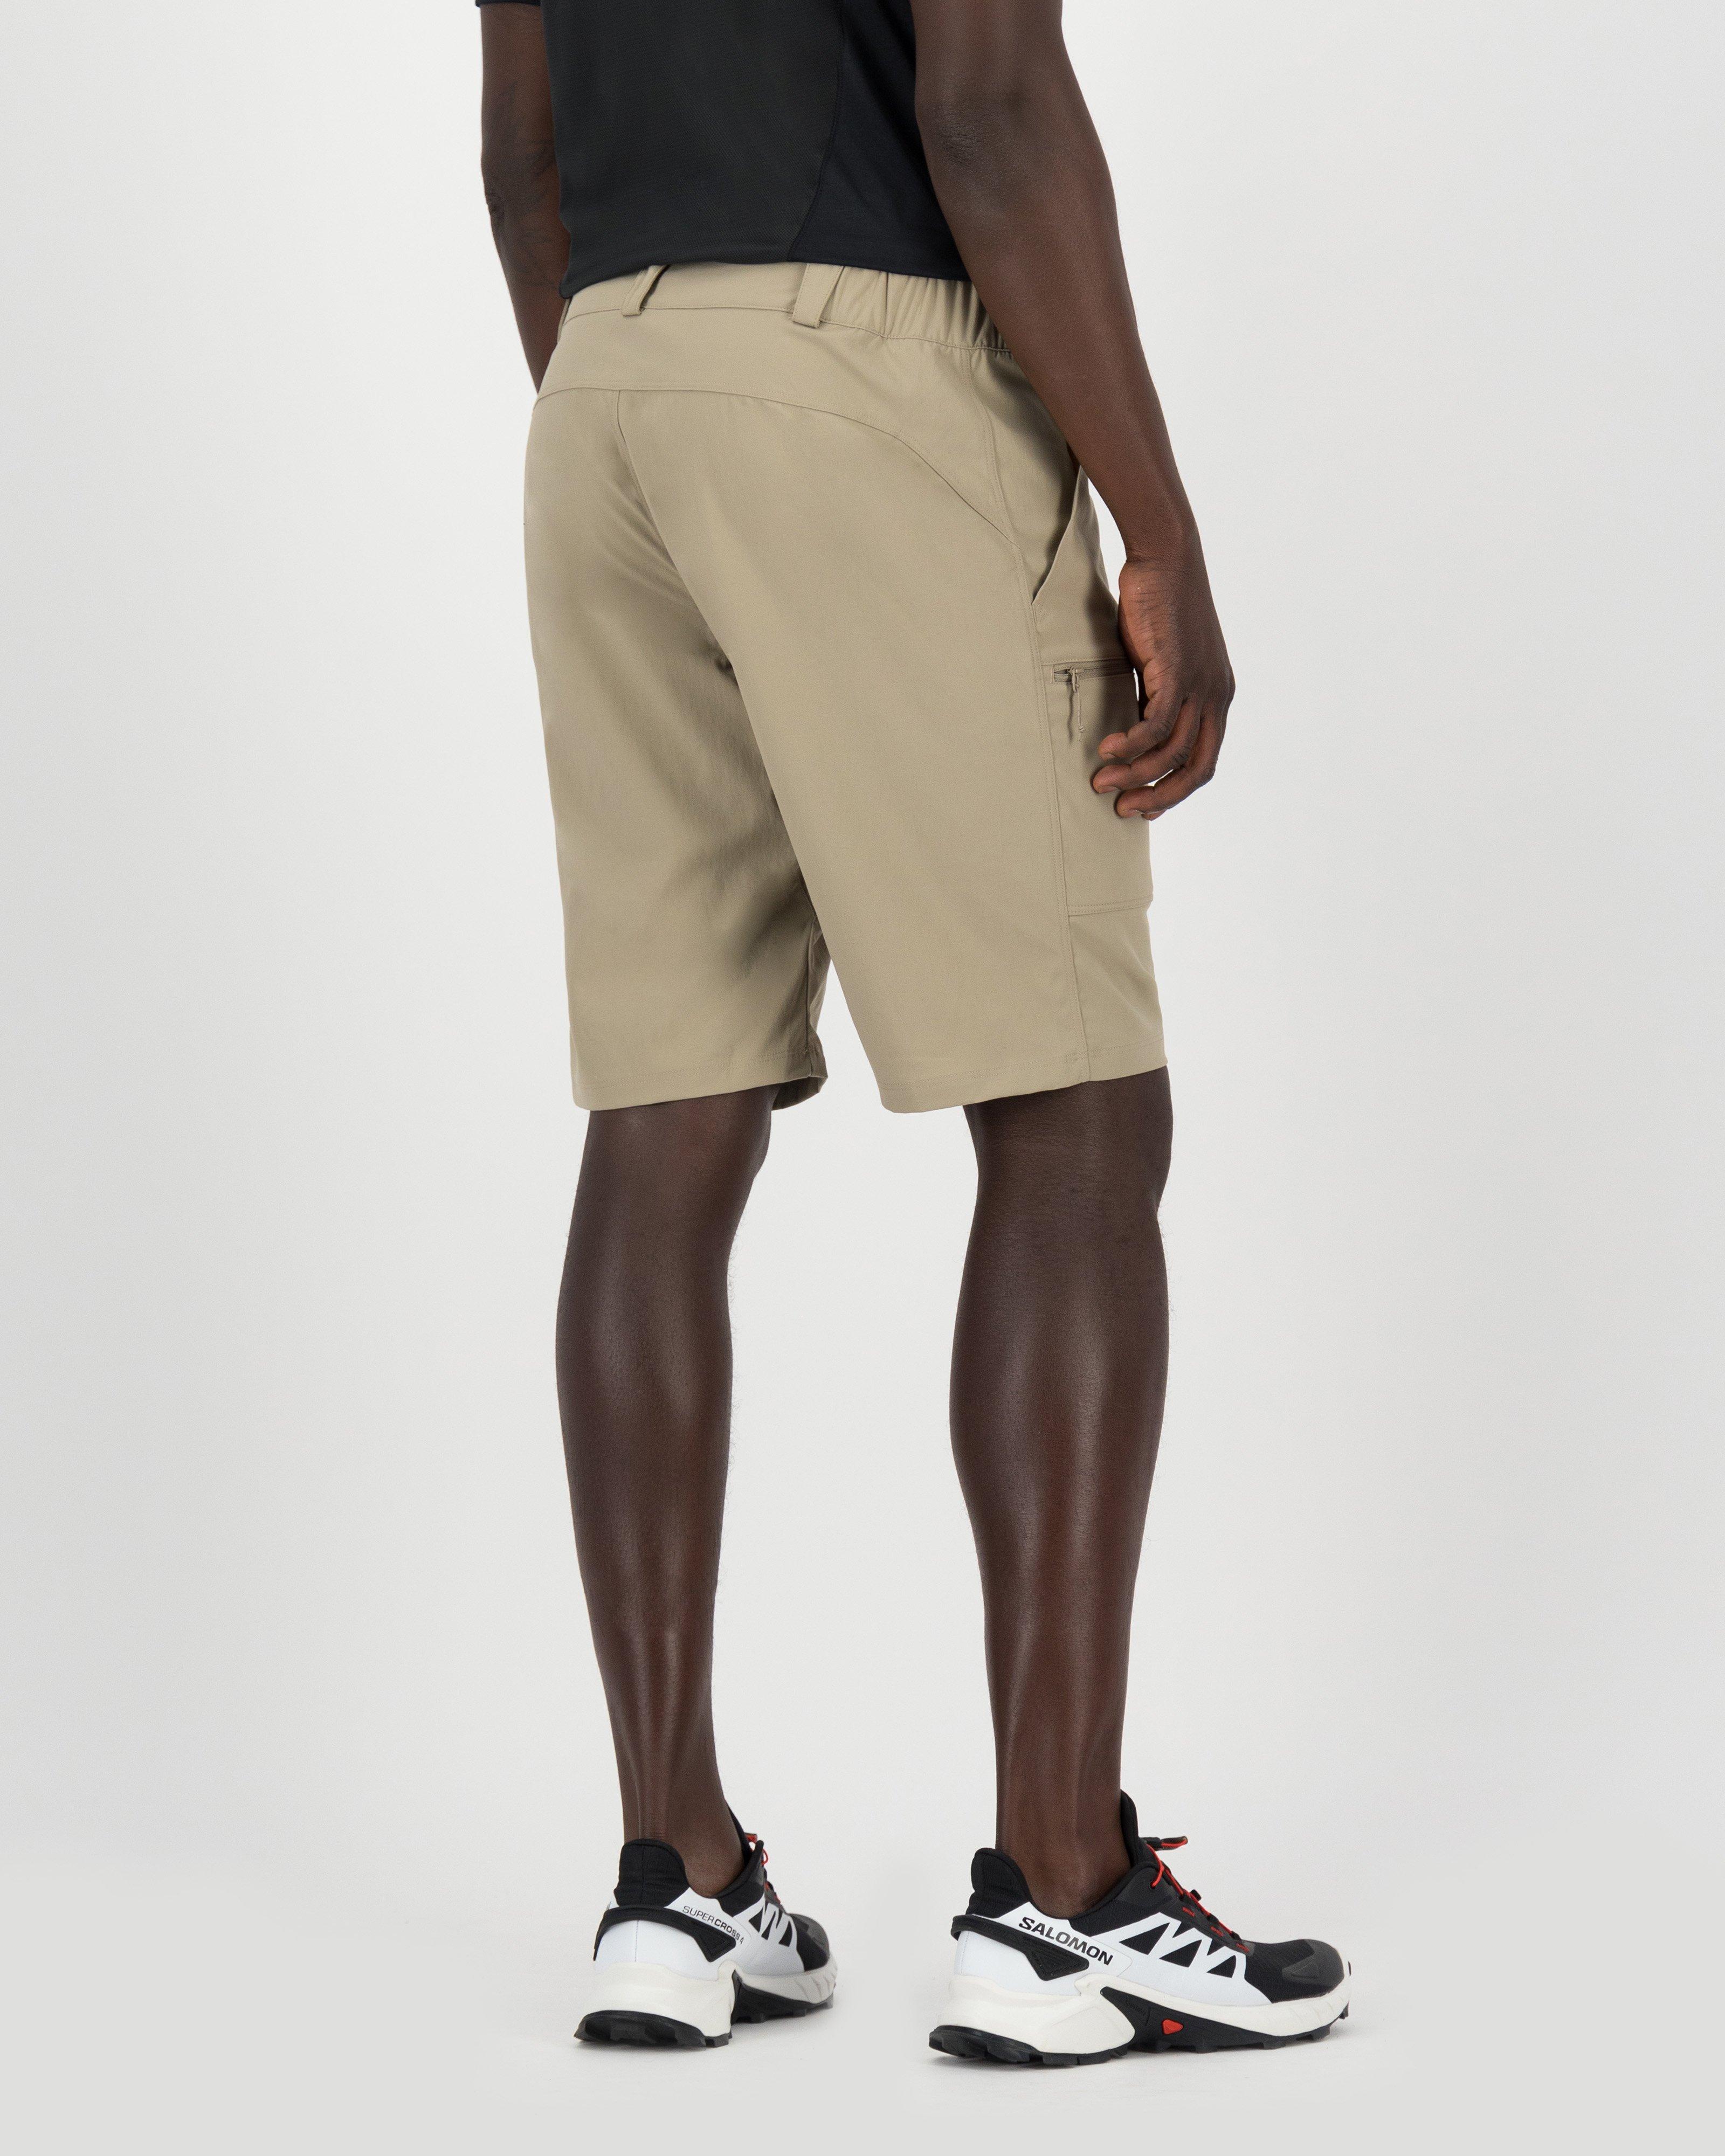 Salomon Men's Outrack Shorts -  Driftwood